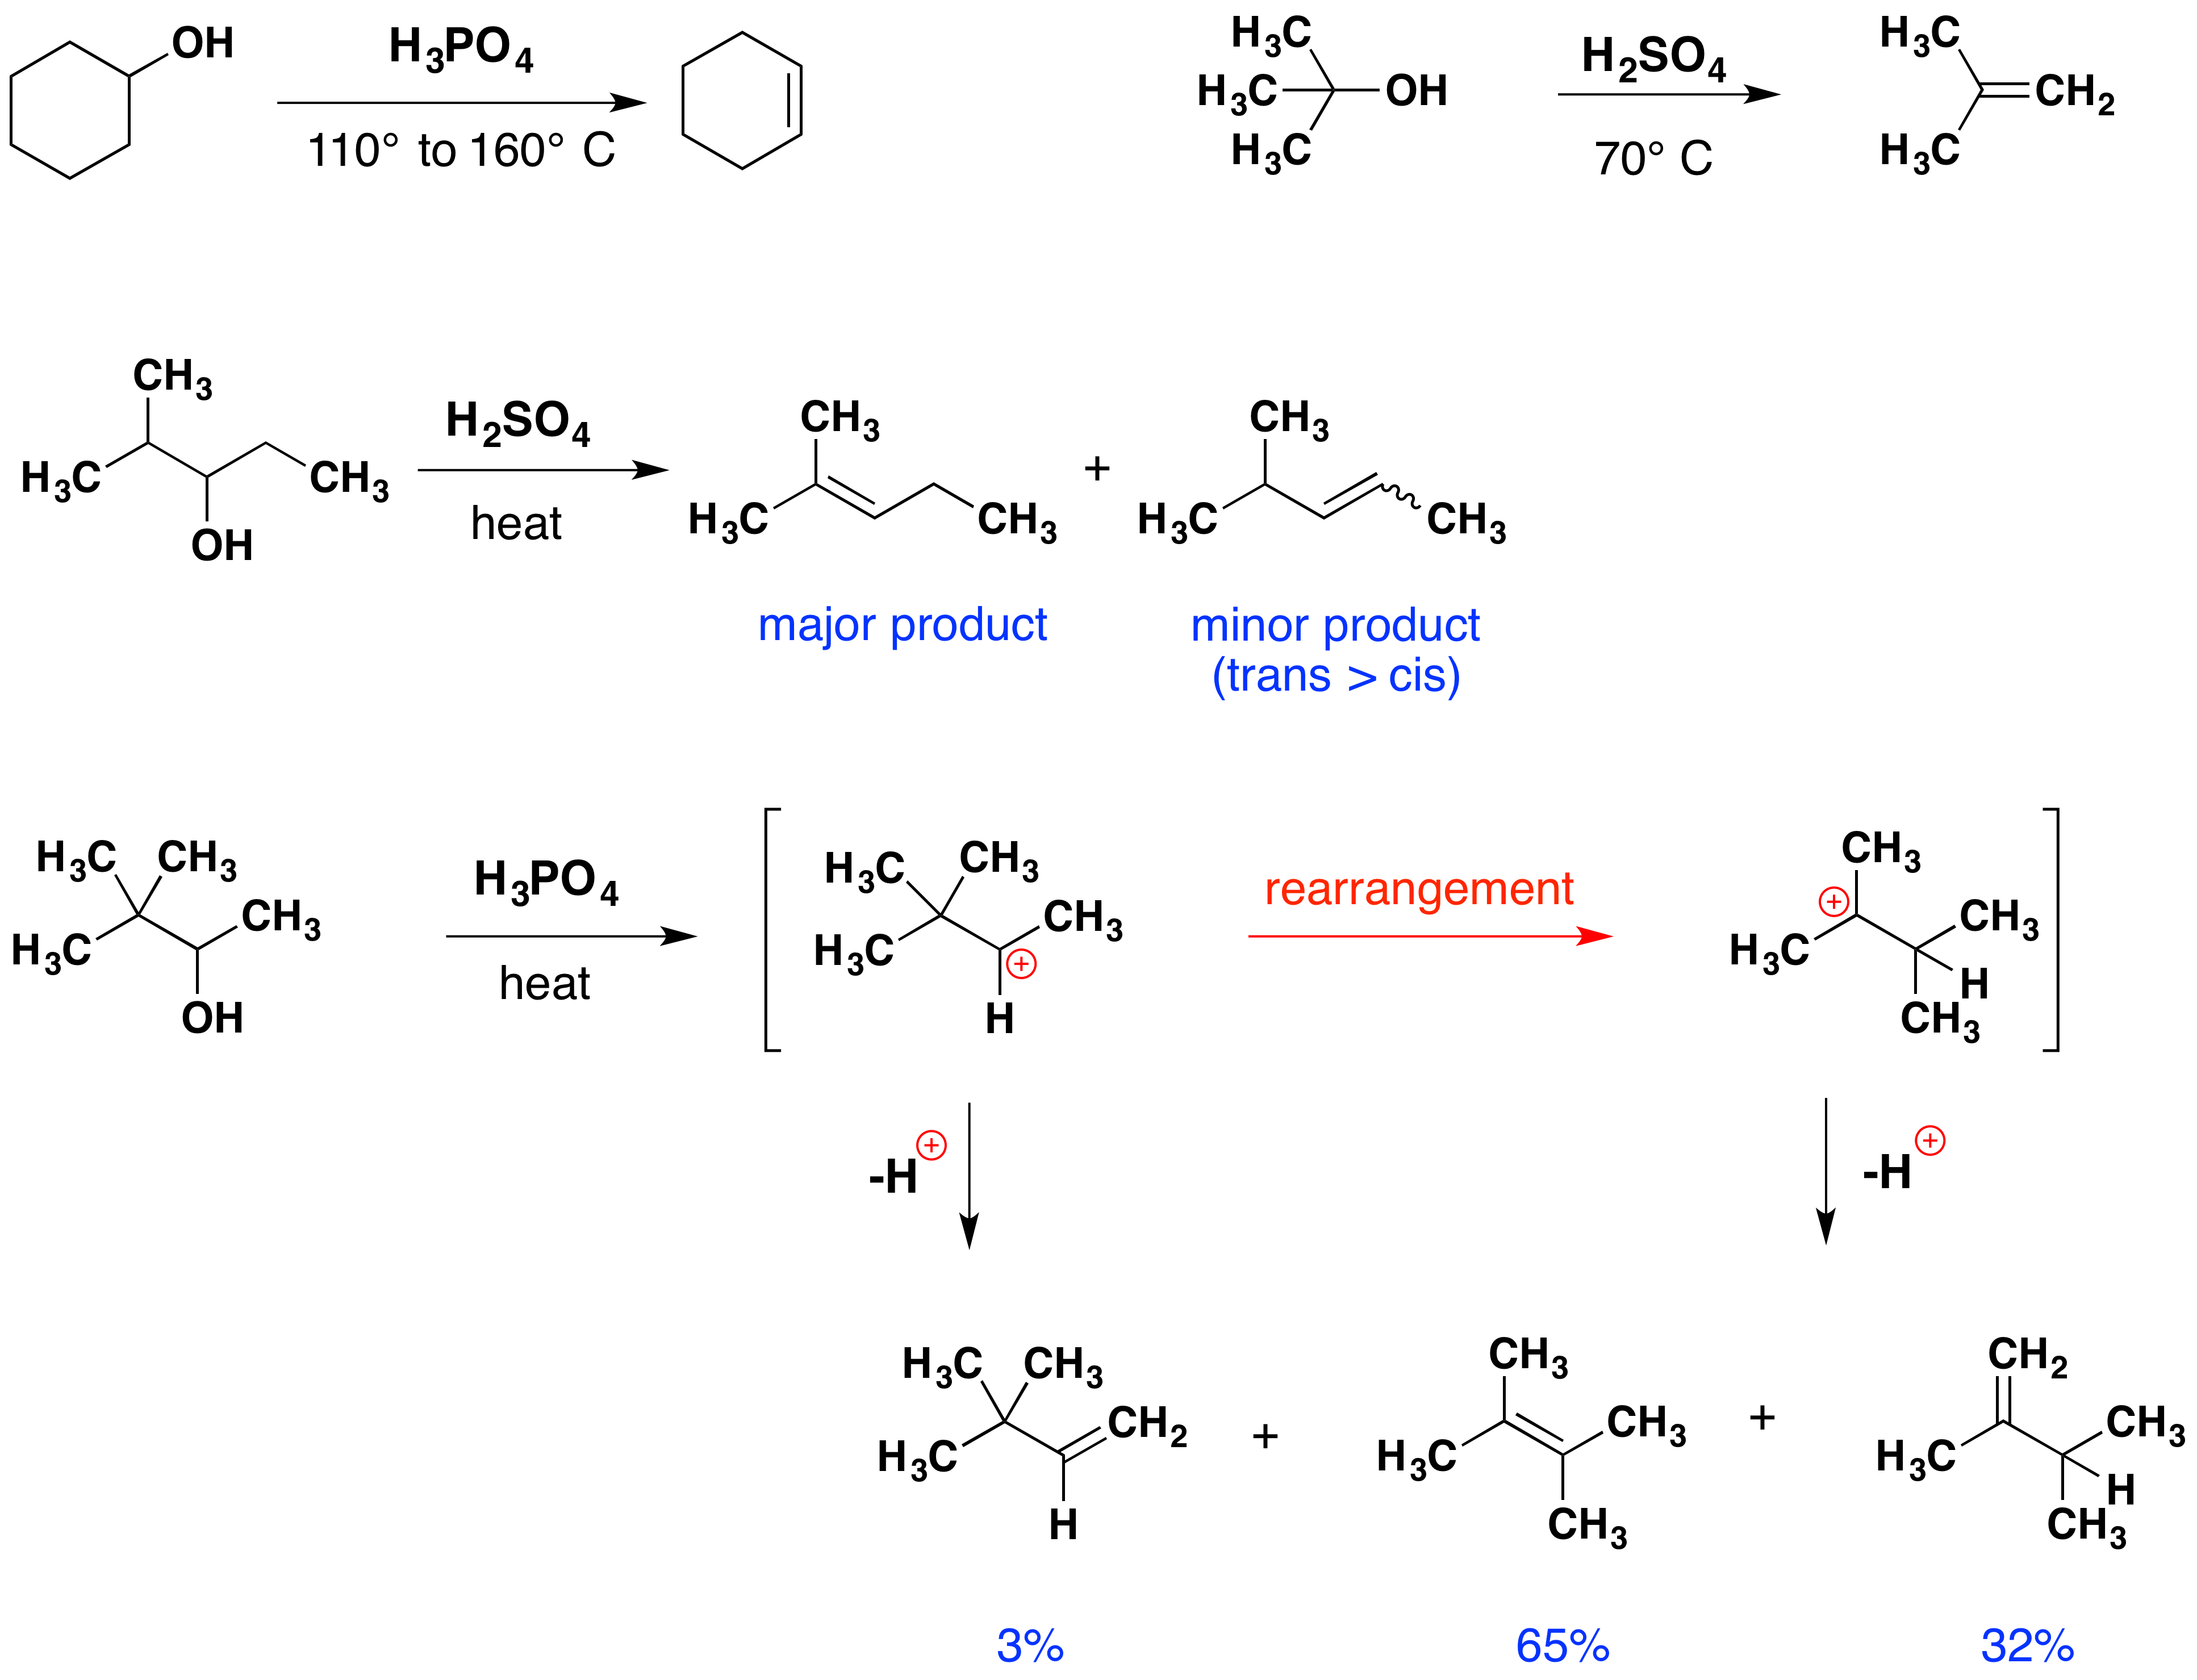 dehydration reaction mechanism of alcohols